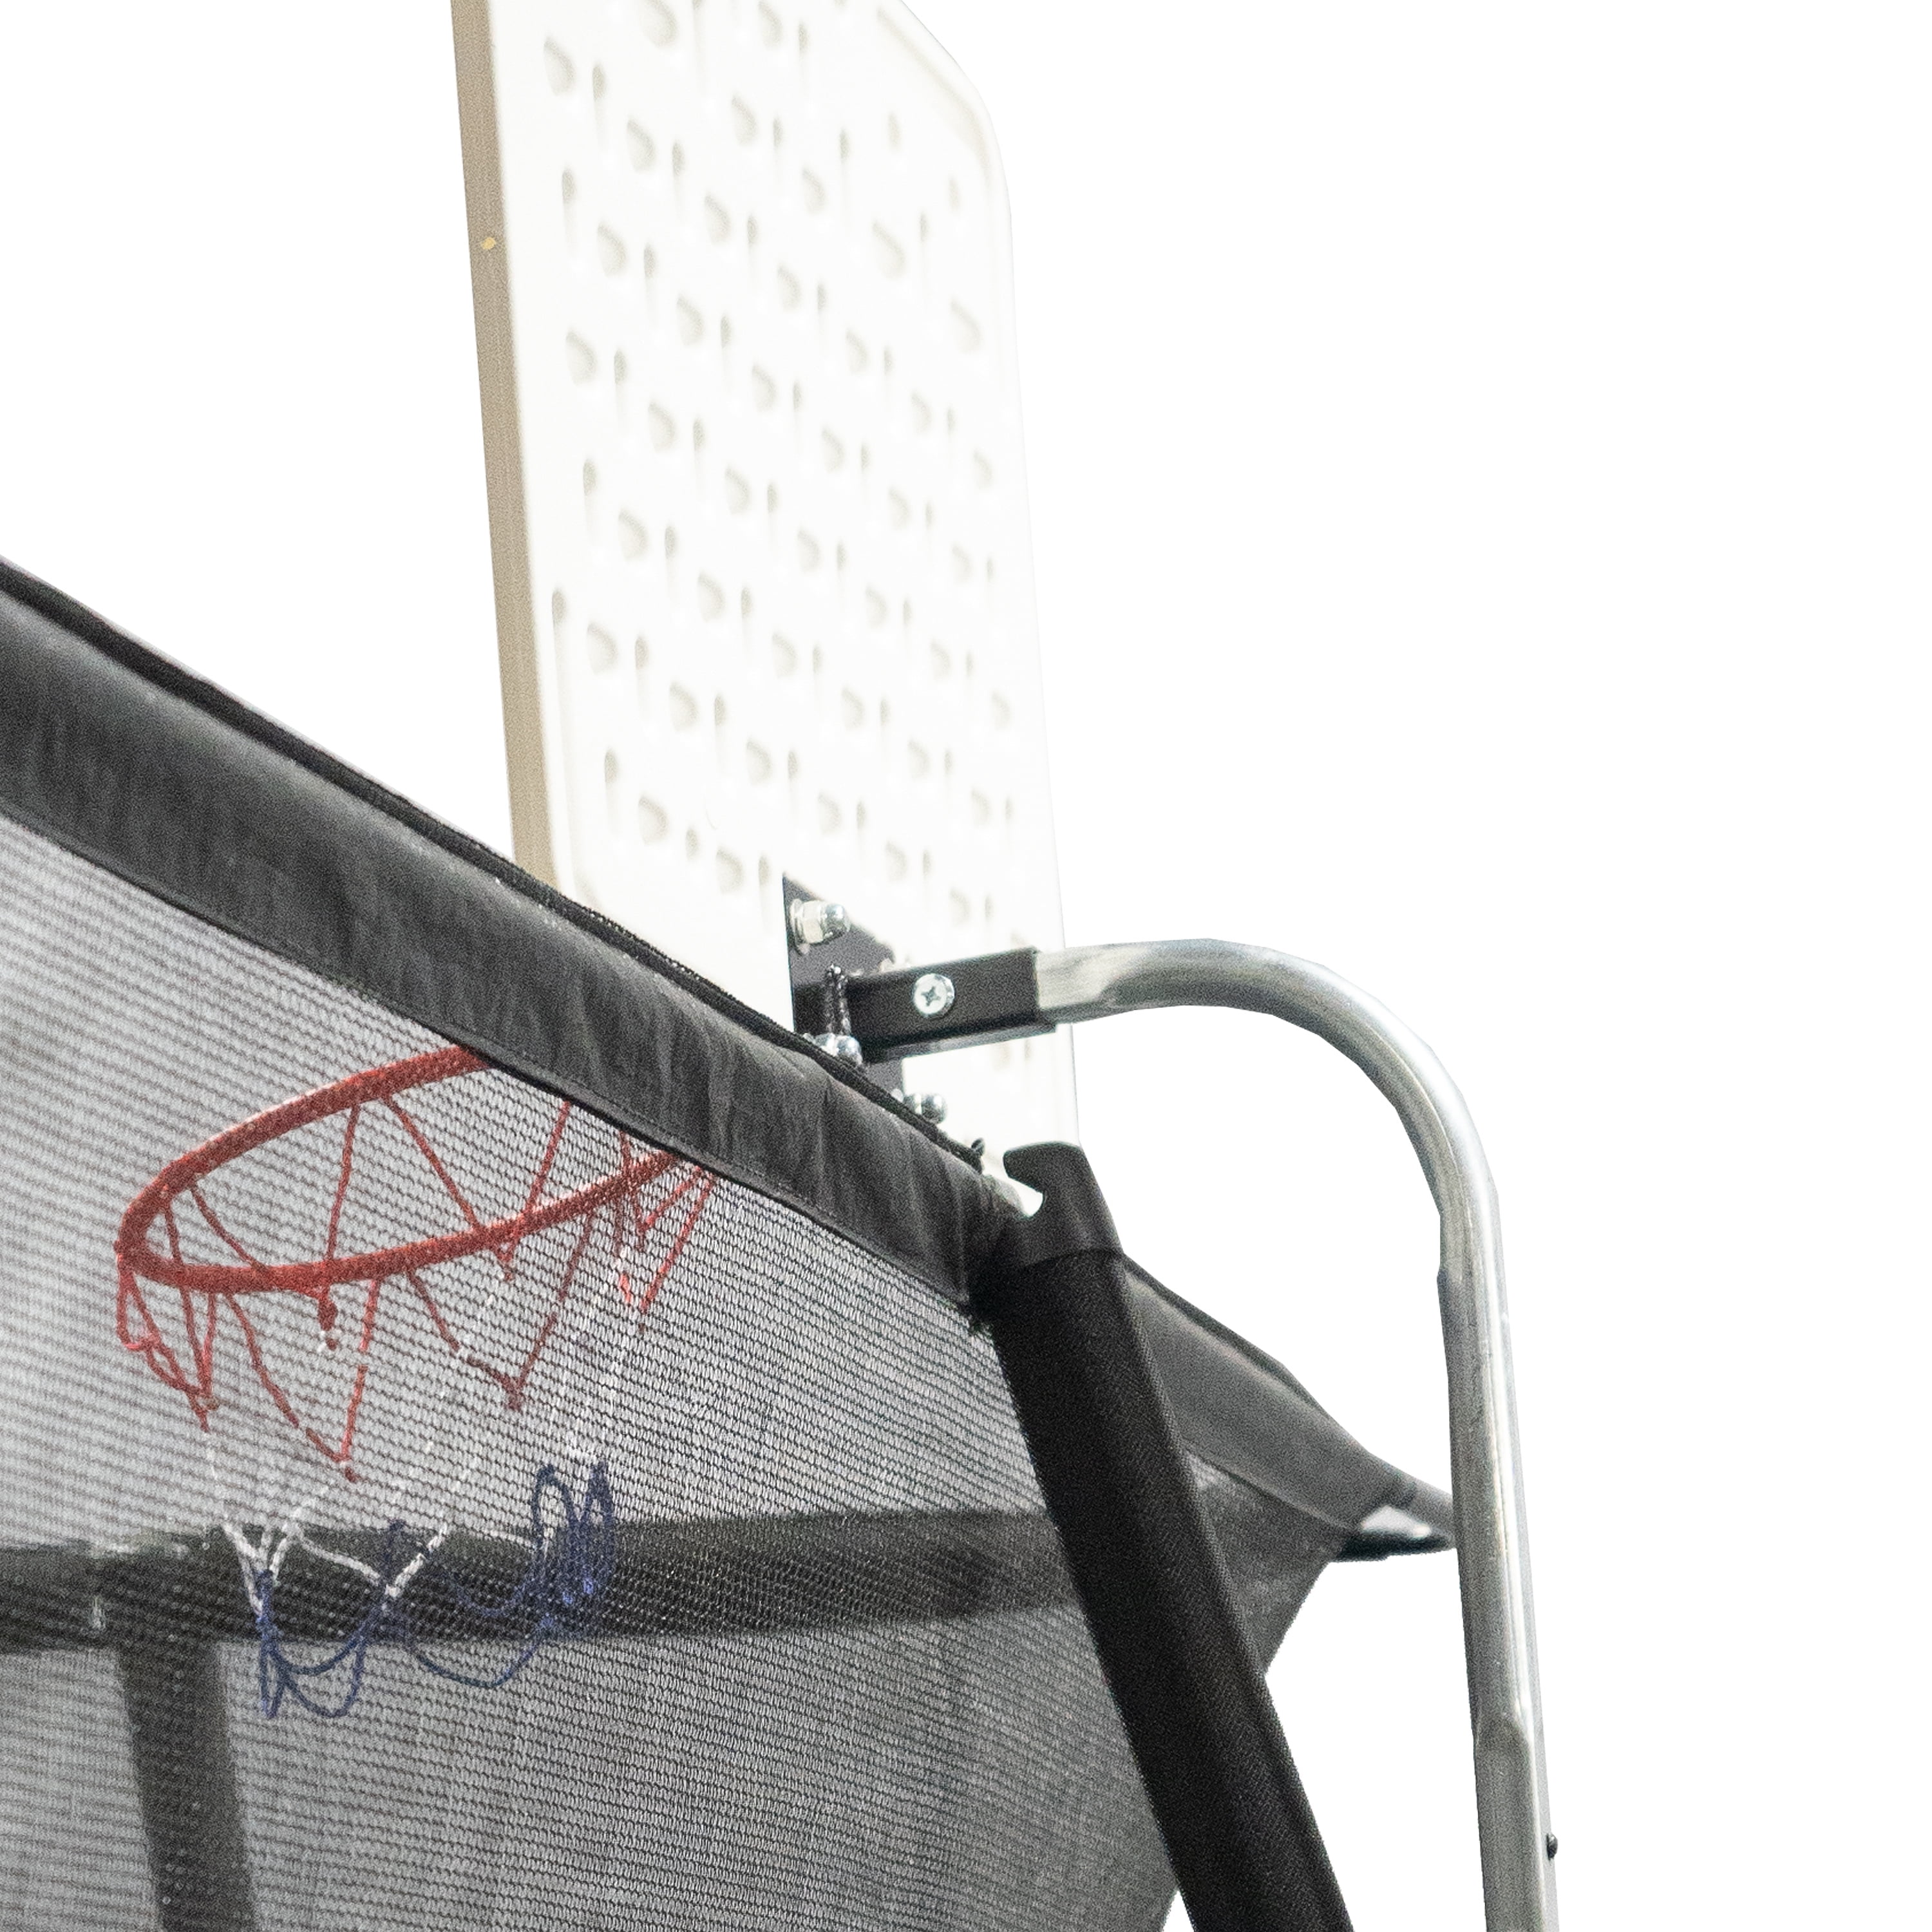 SkyBound Trampoline Basketball Hoop Attachment with Mini Basketball an –  SkyBound USA